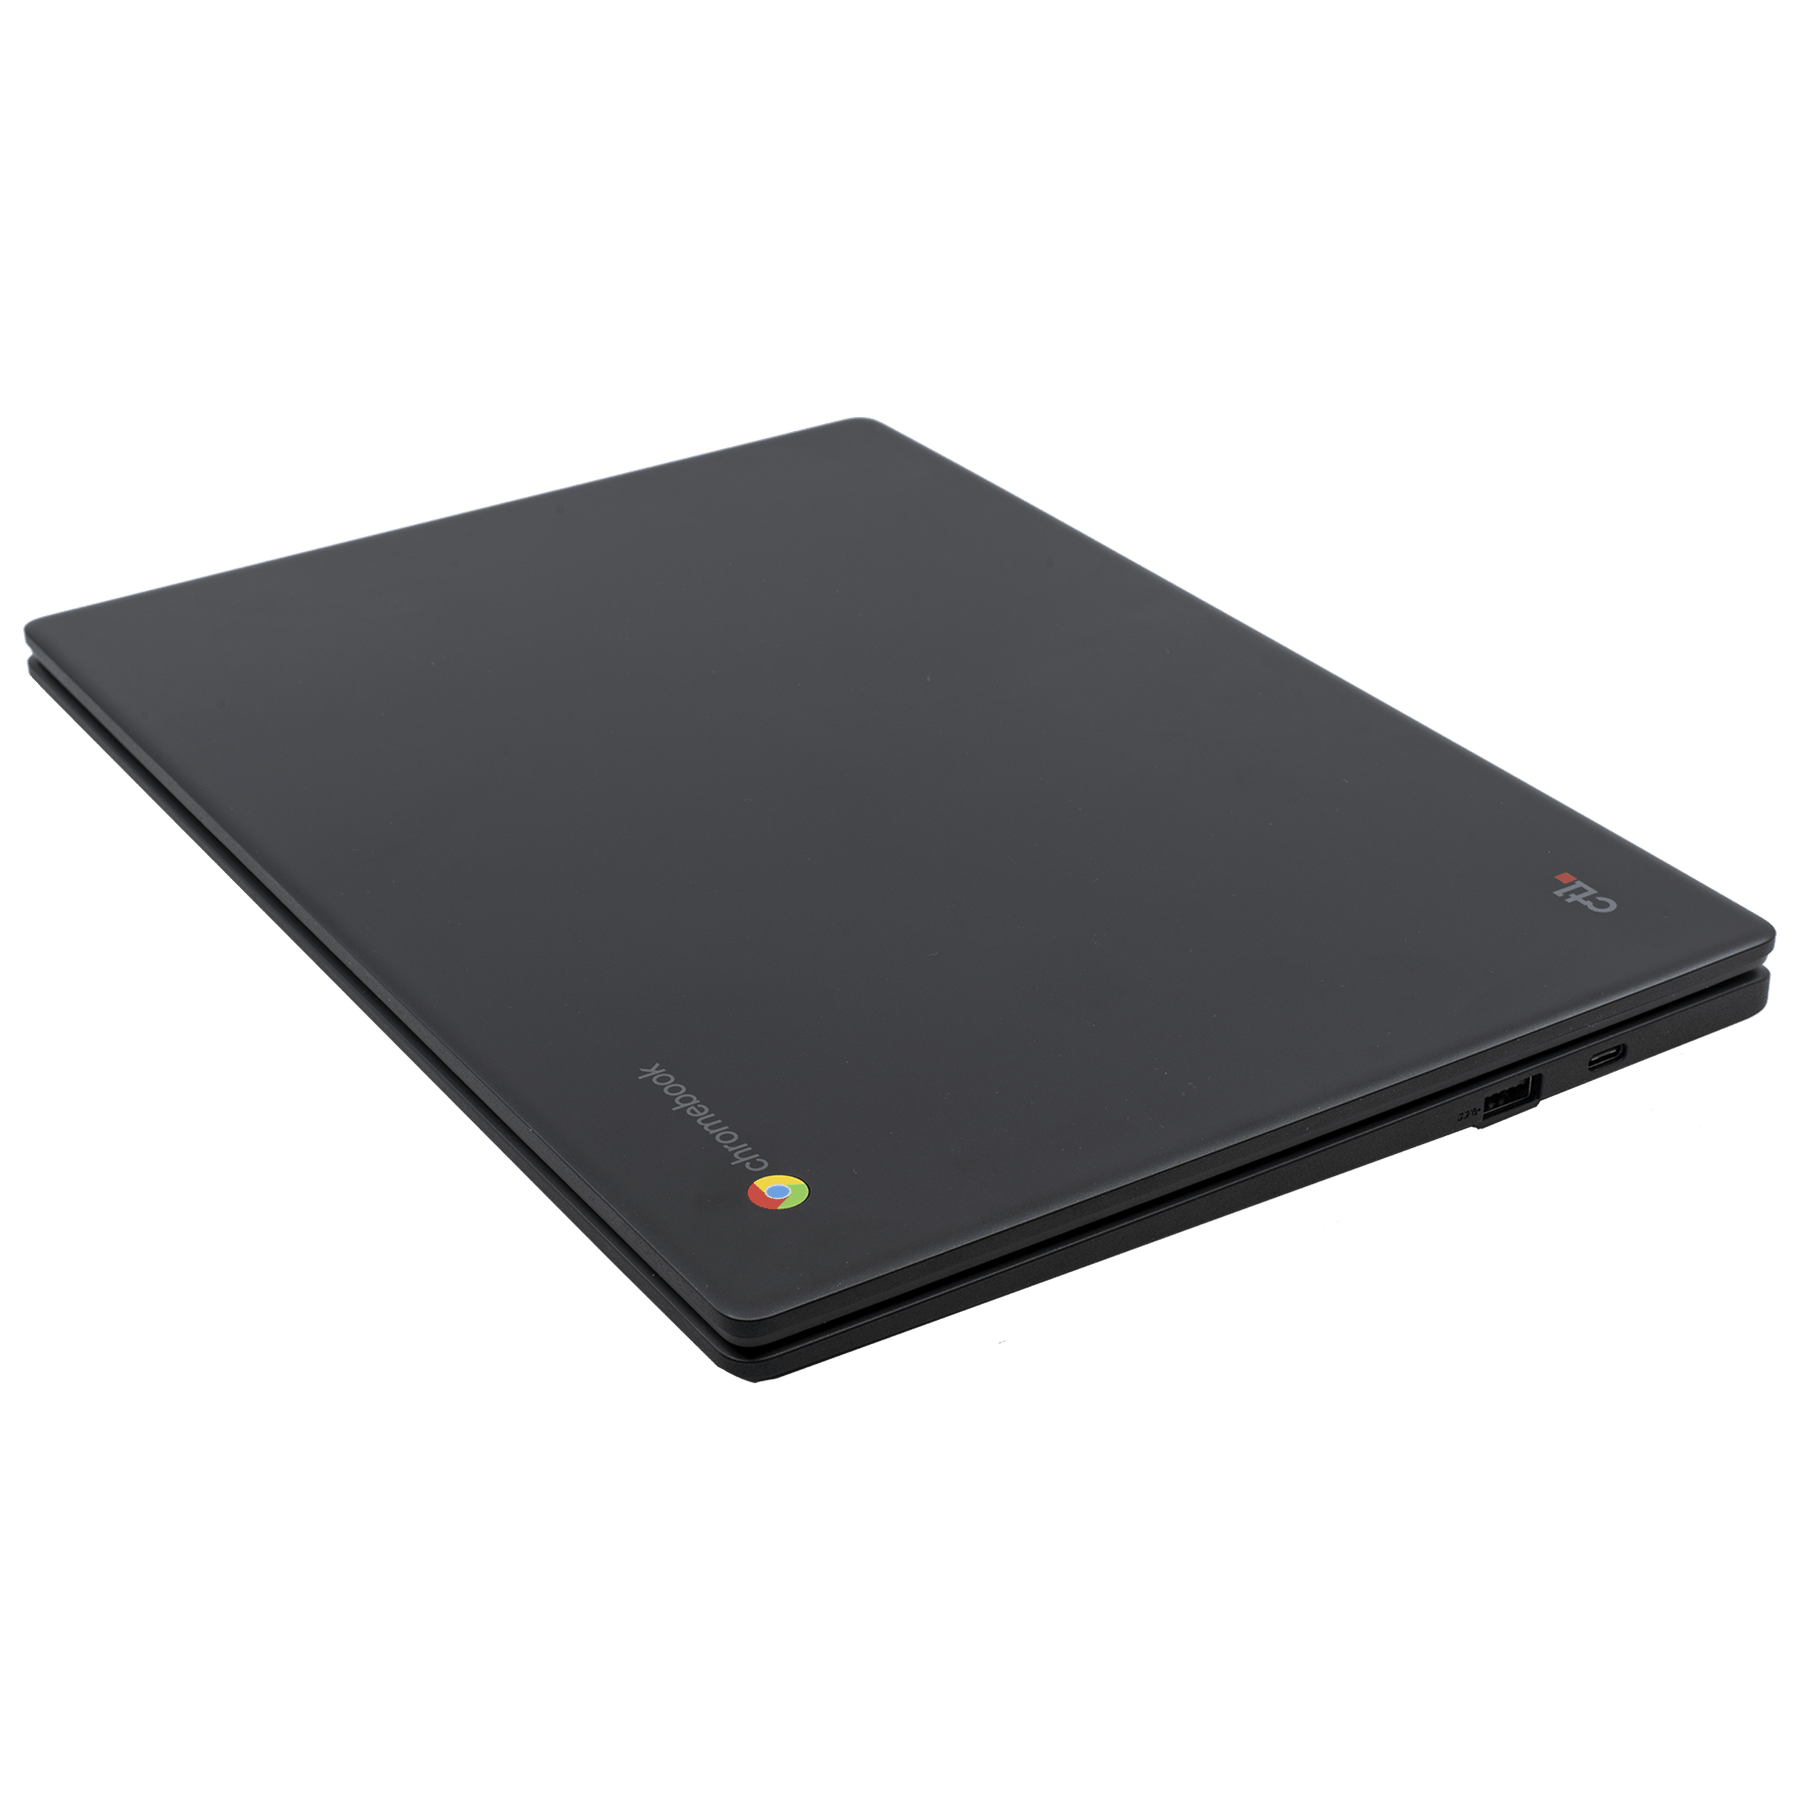 CTL Chromebook PX14EX | MLTI Teacher Chromebook